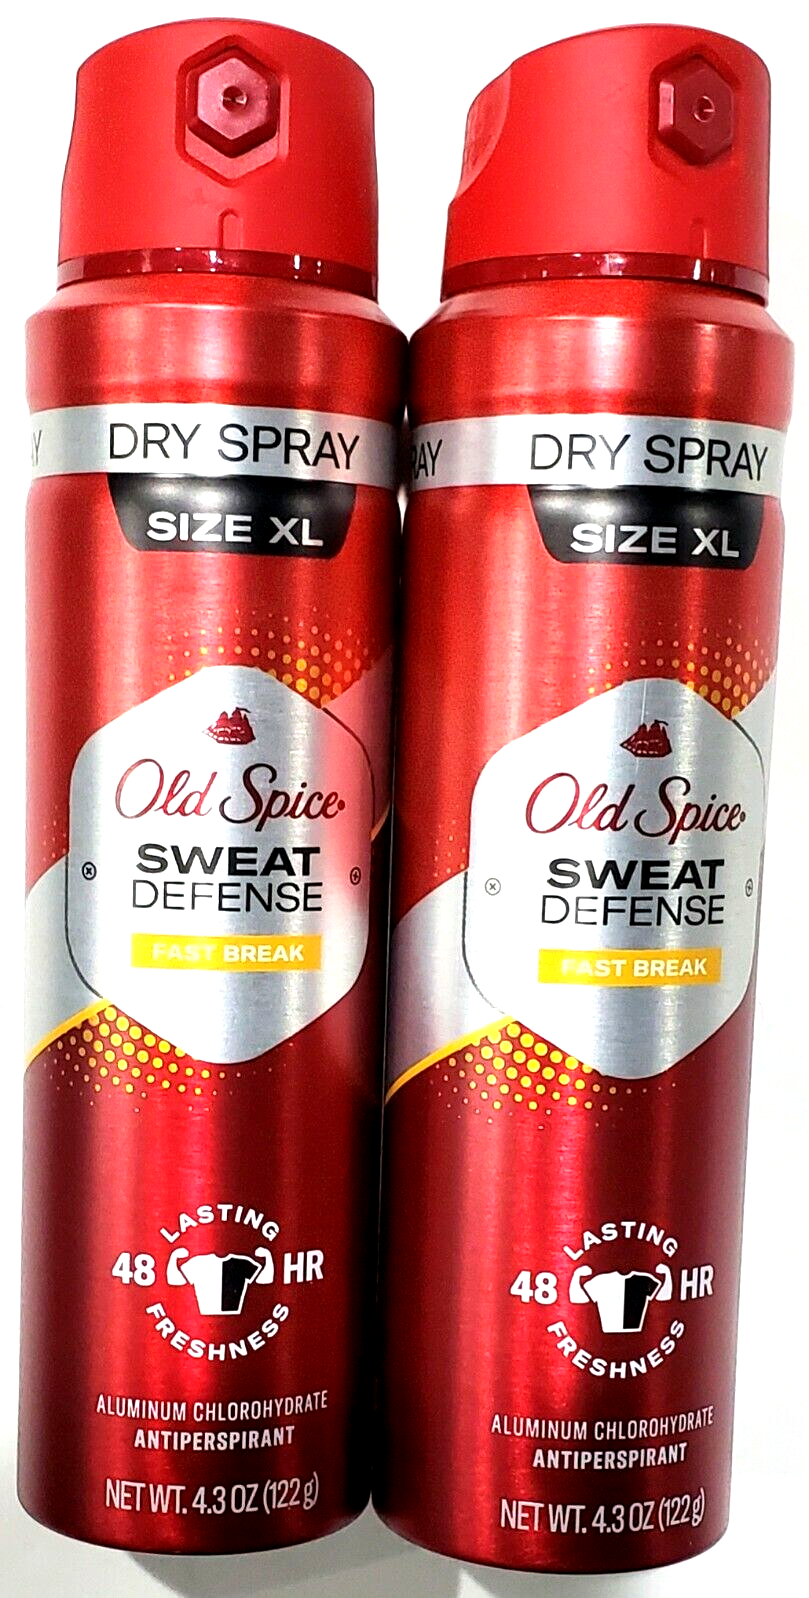 2 Bottles Old Spice Sweat Defense Fast Break 48 Hour Dry Spray Size XL 4.3 Oz. - $29.99